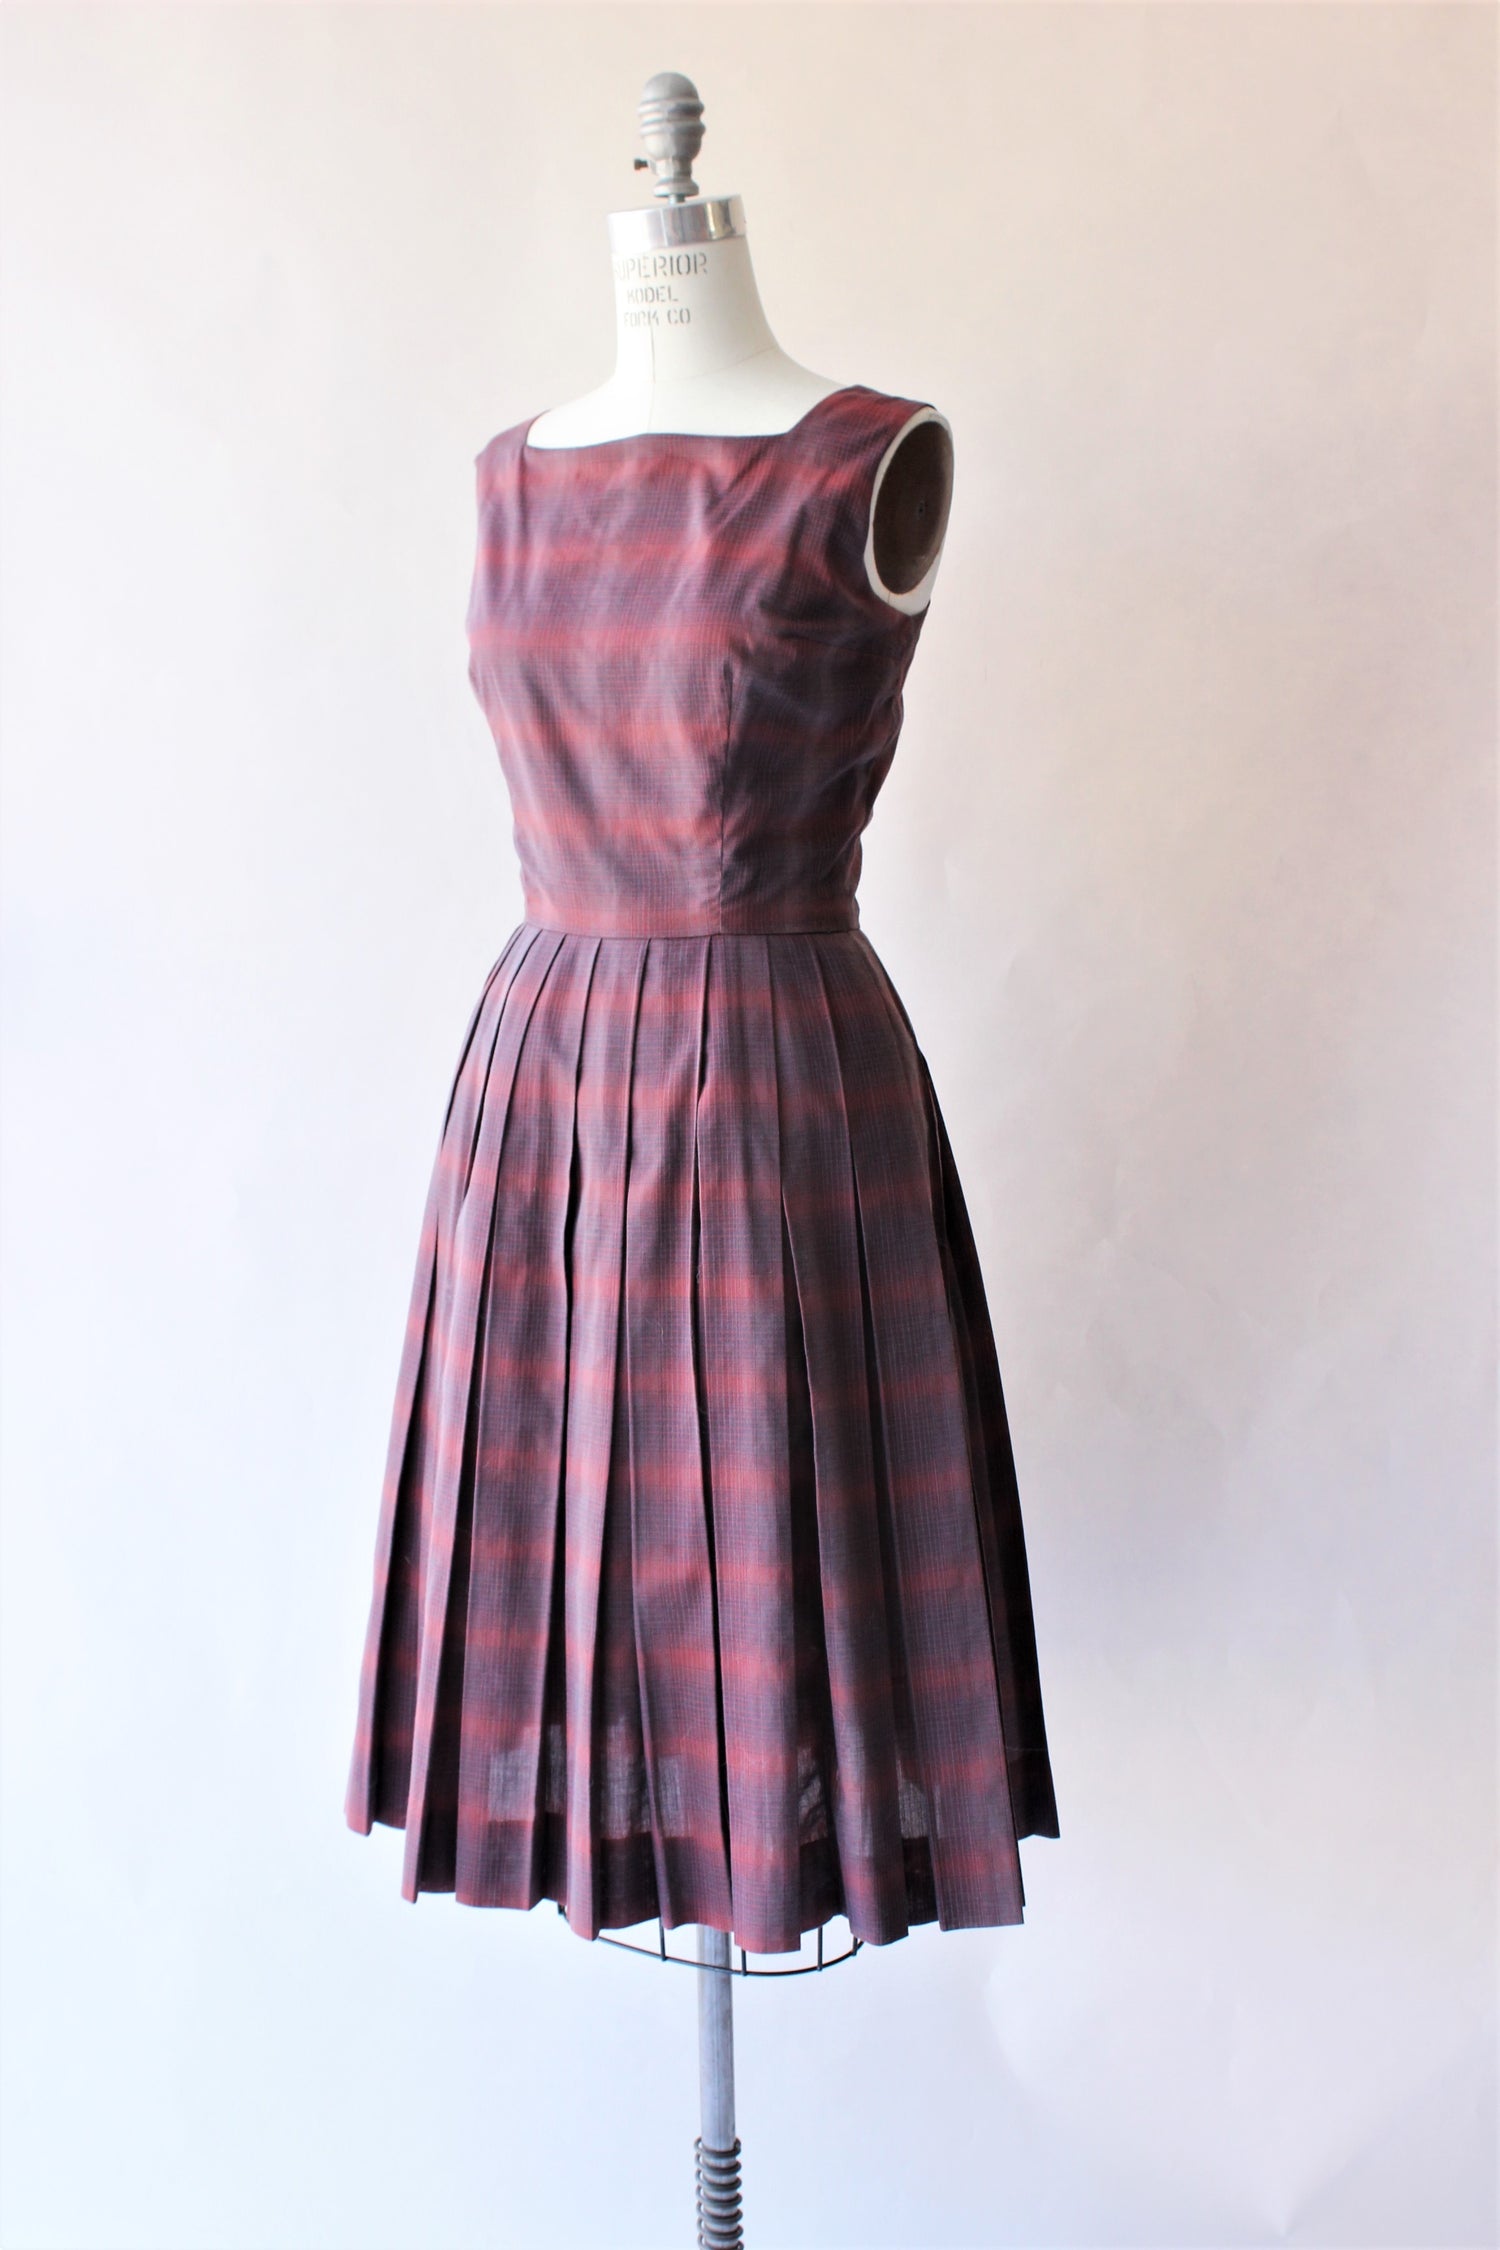 Vintage 1950s California Girl Plaid Dress